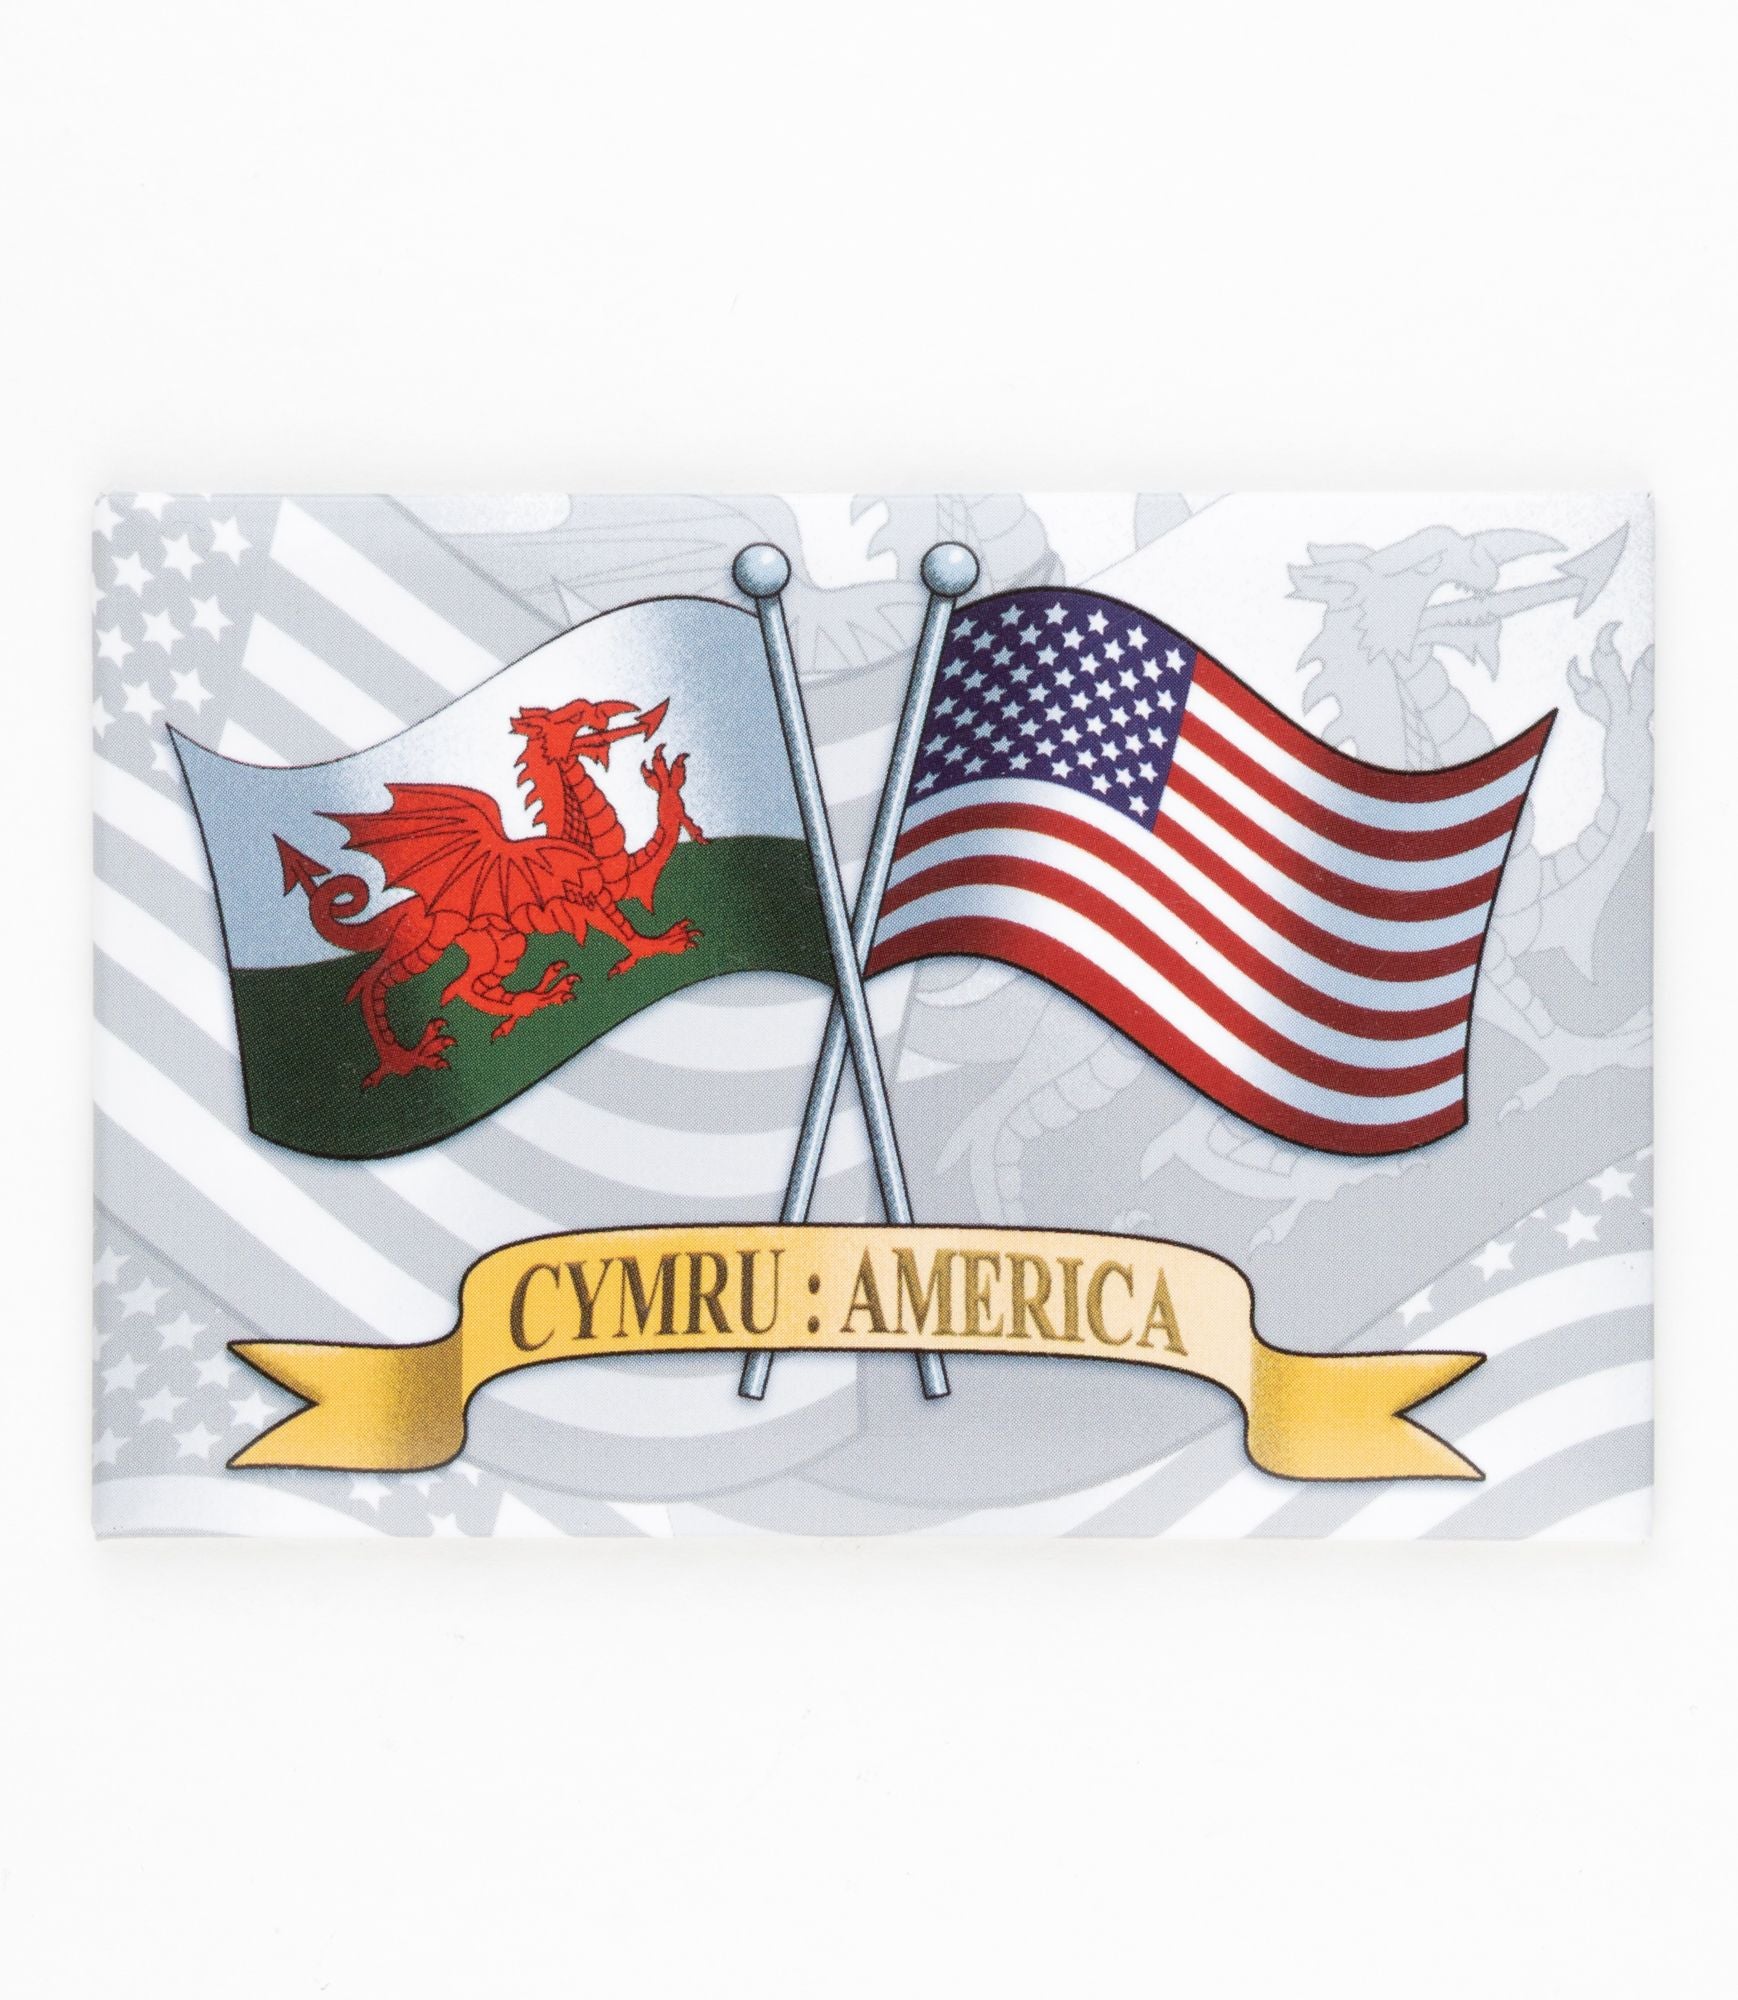 'Cymru: America' fridge magnet